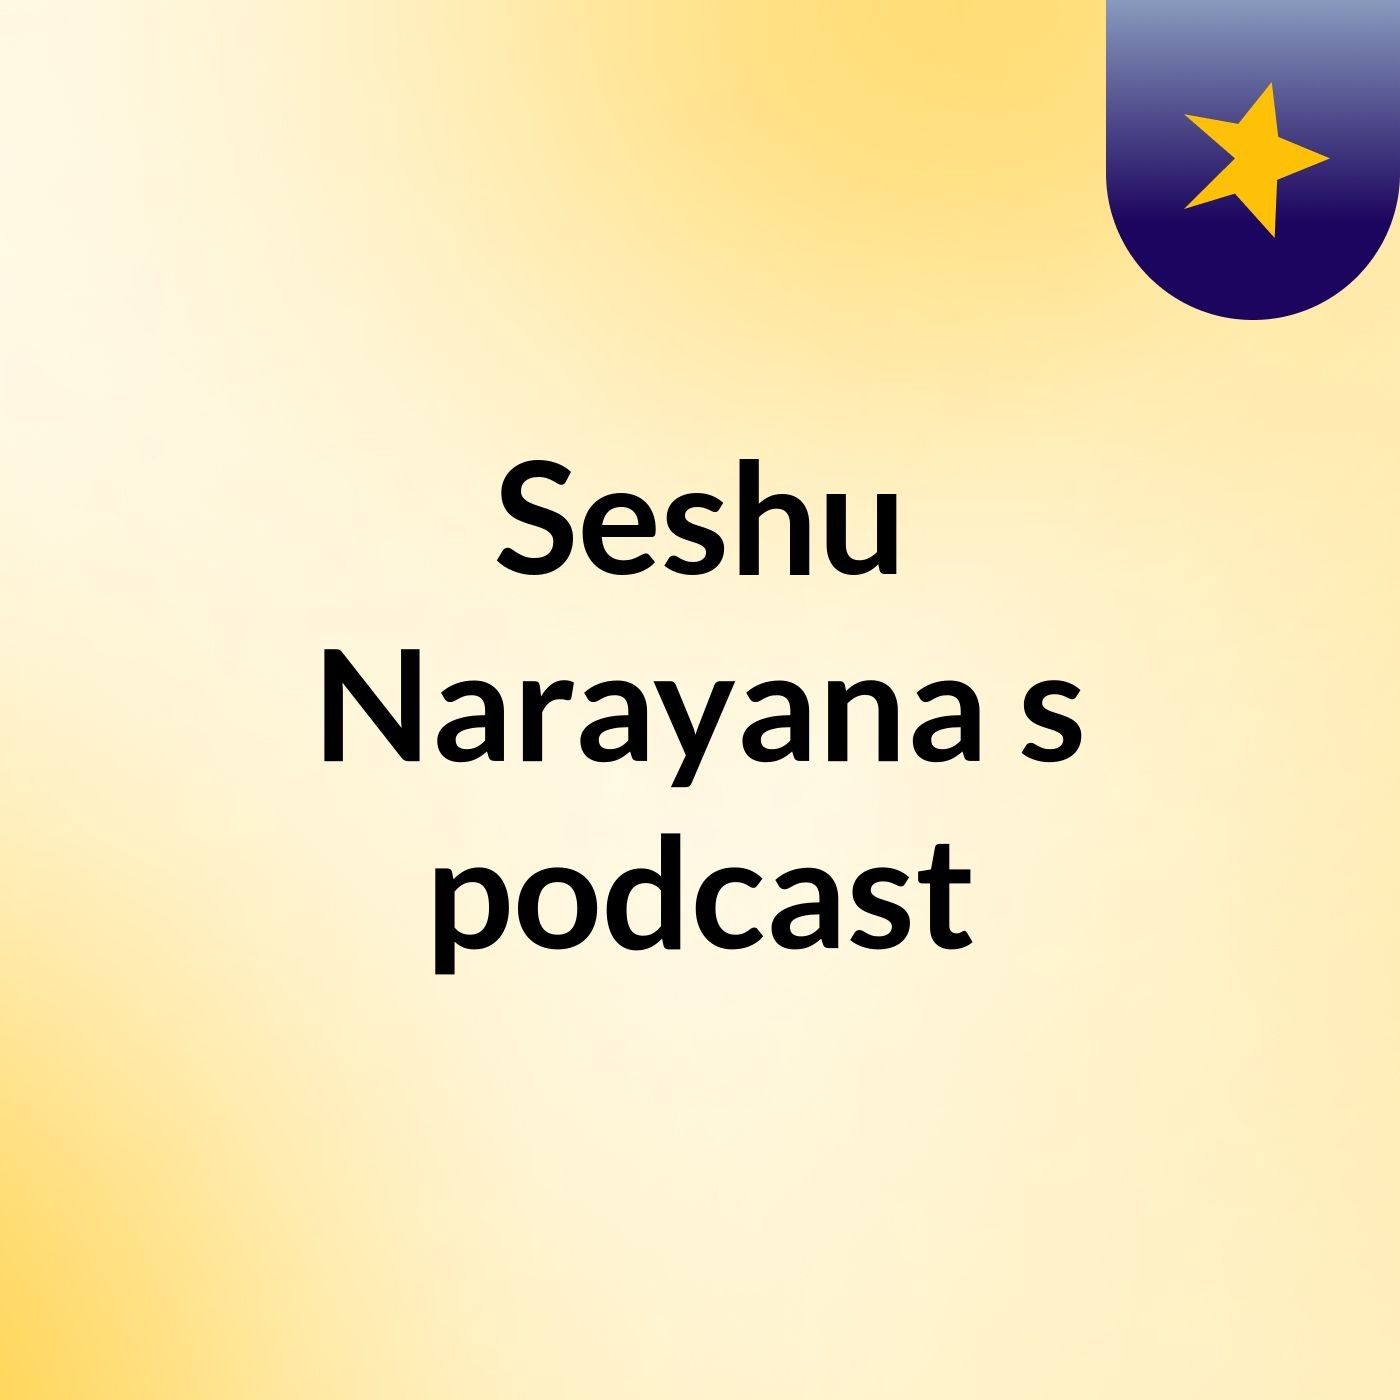 Episode 2 - Seshu Narayana's podcast